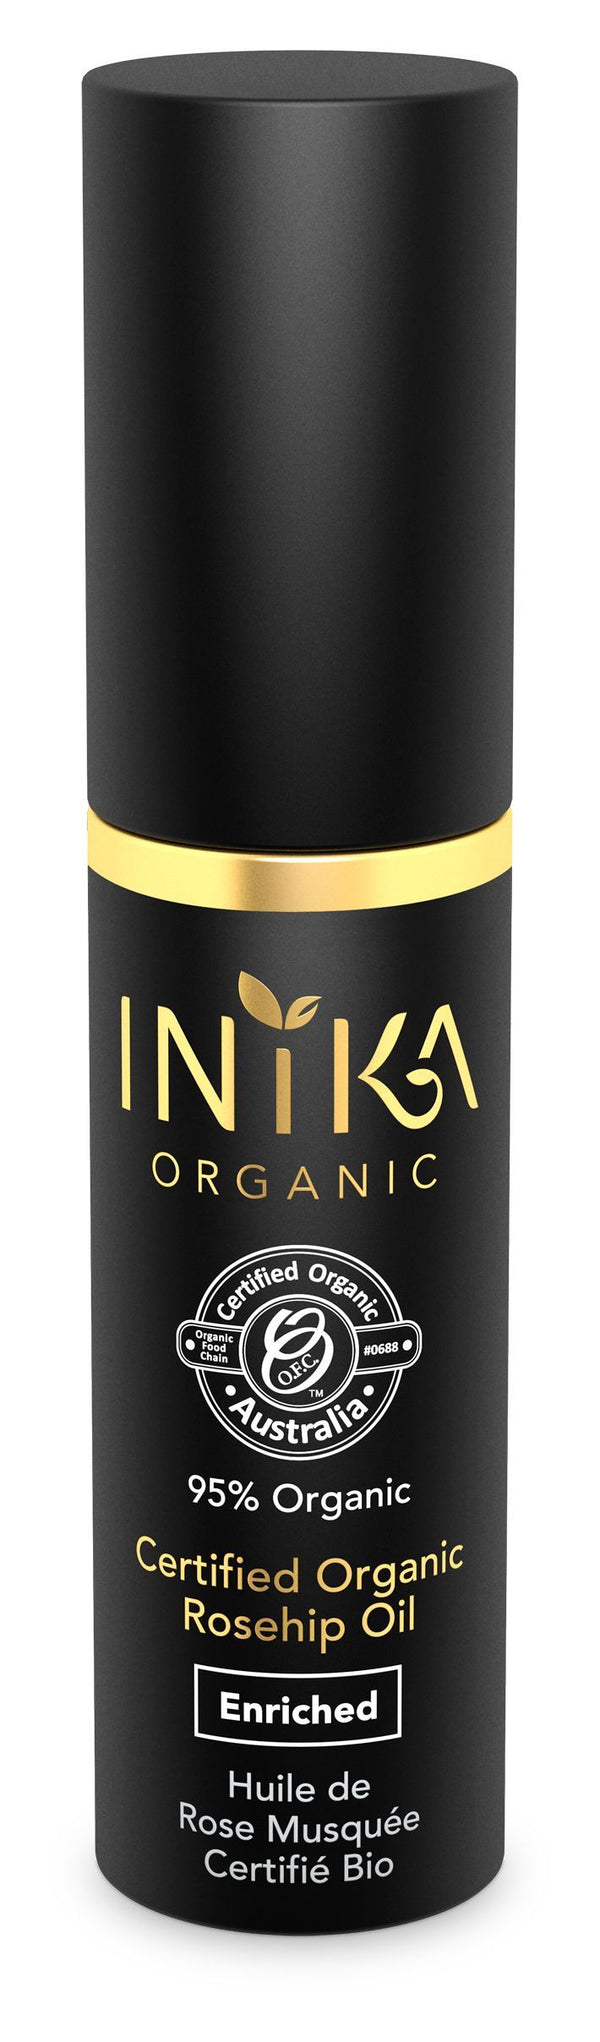 inika-organics-certified-organic-enriched-rosehip-oil